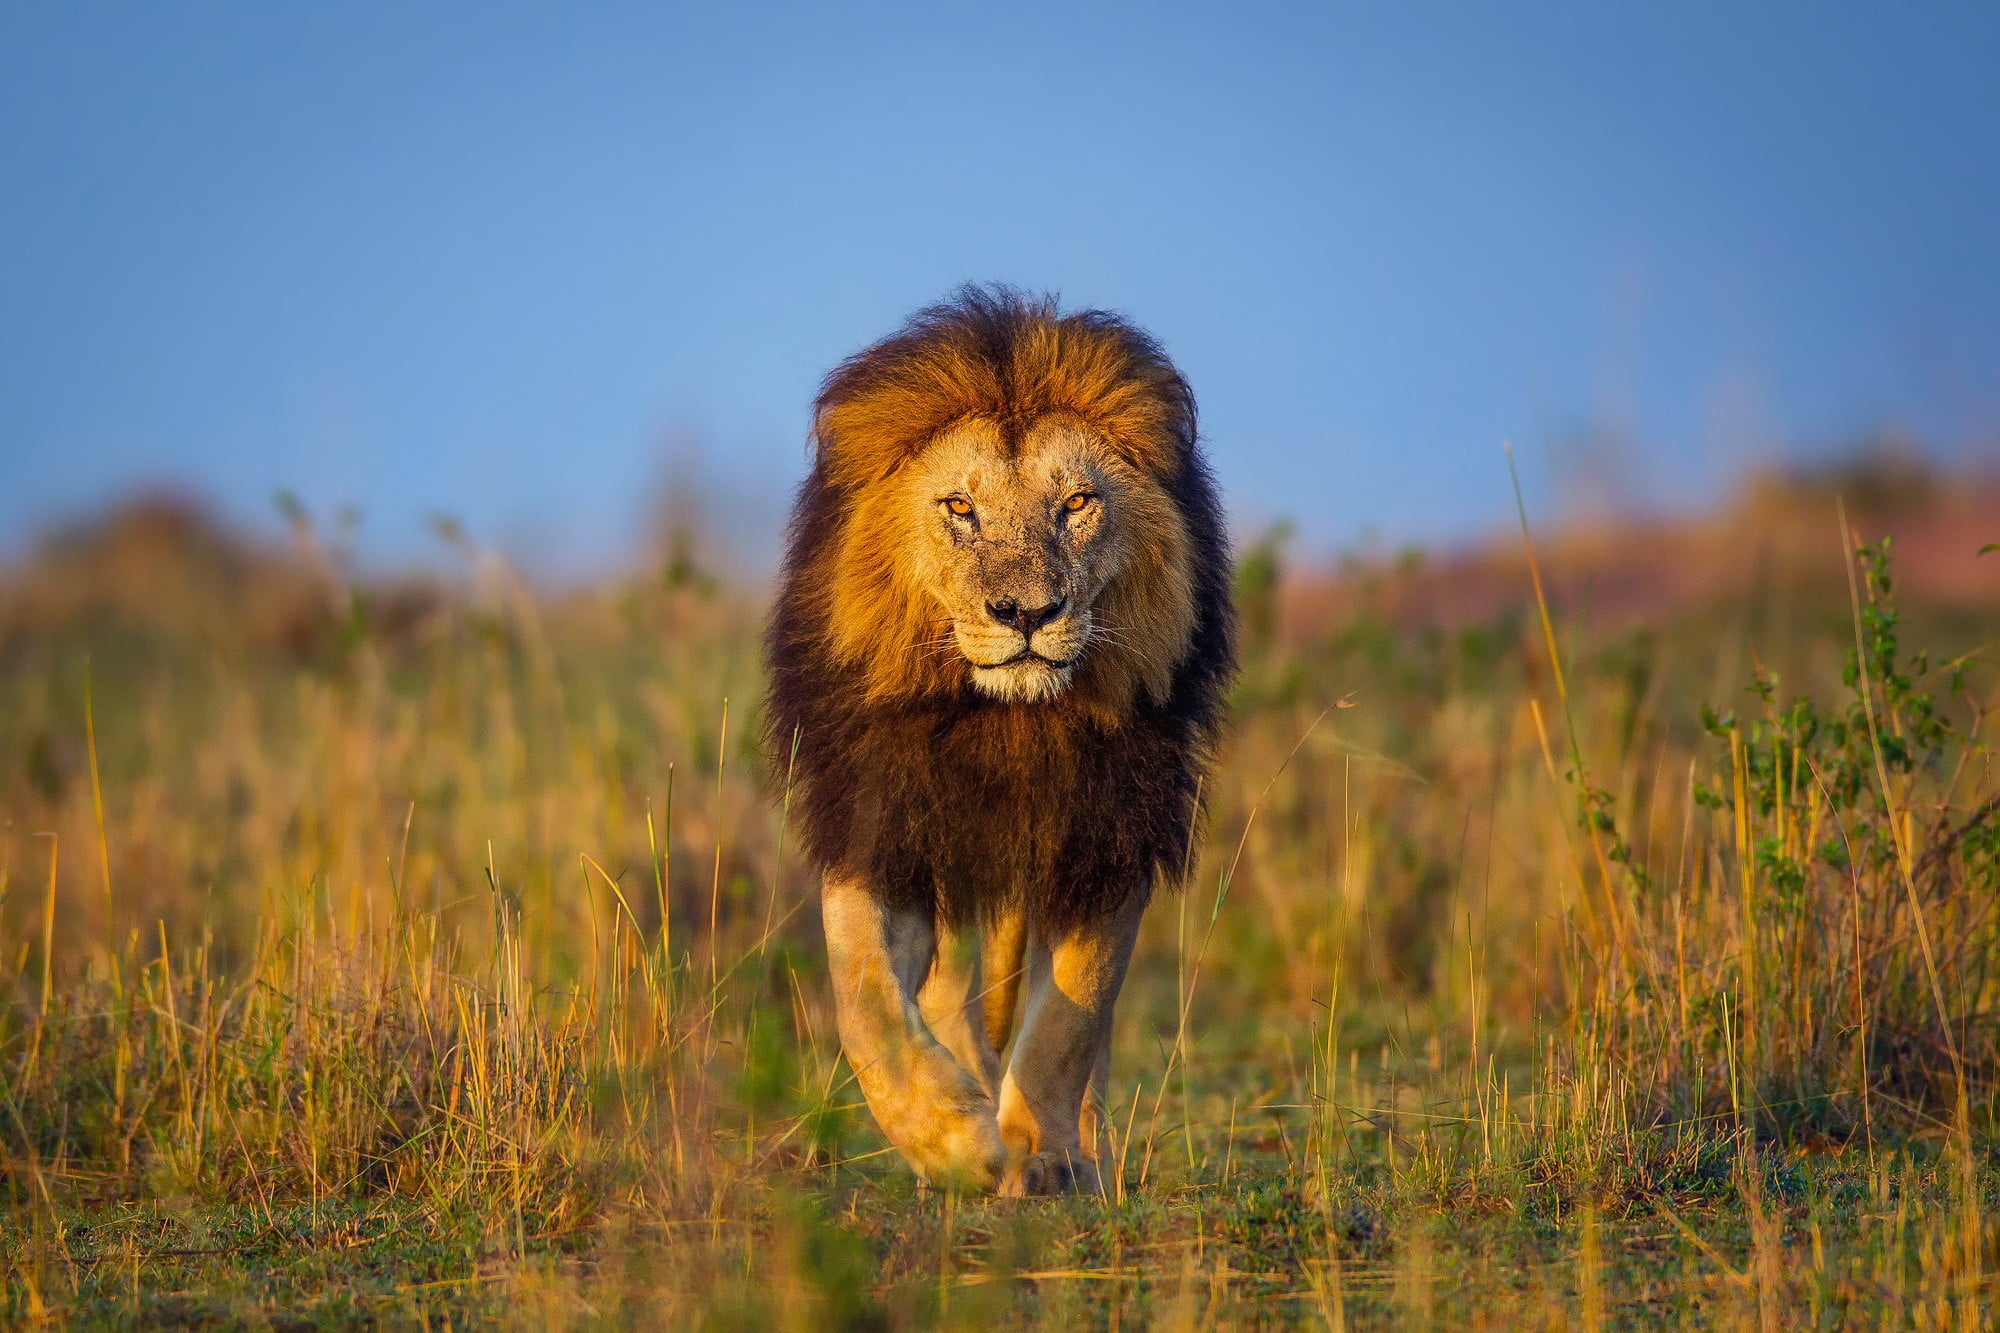 brown lion walking on grass field